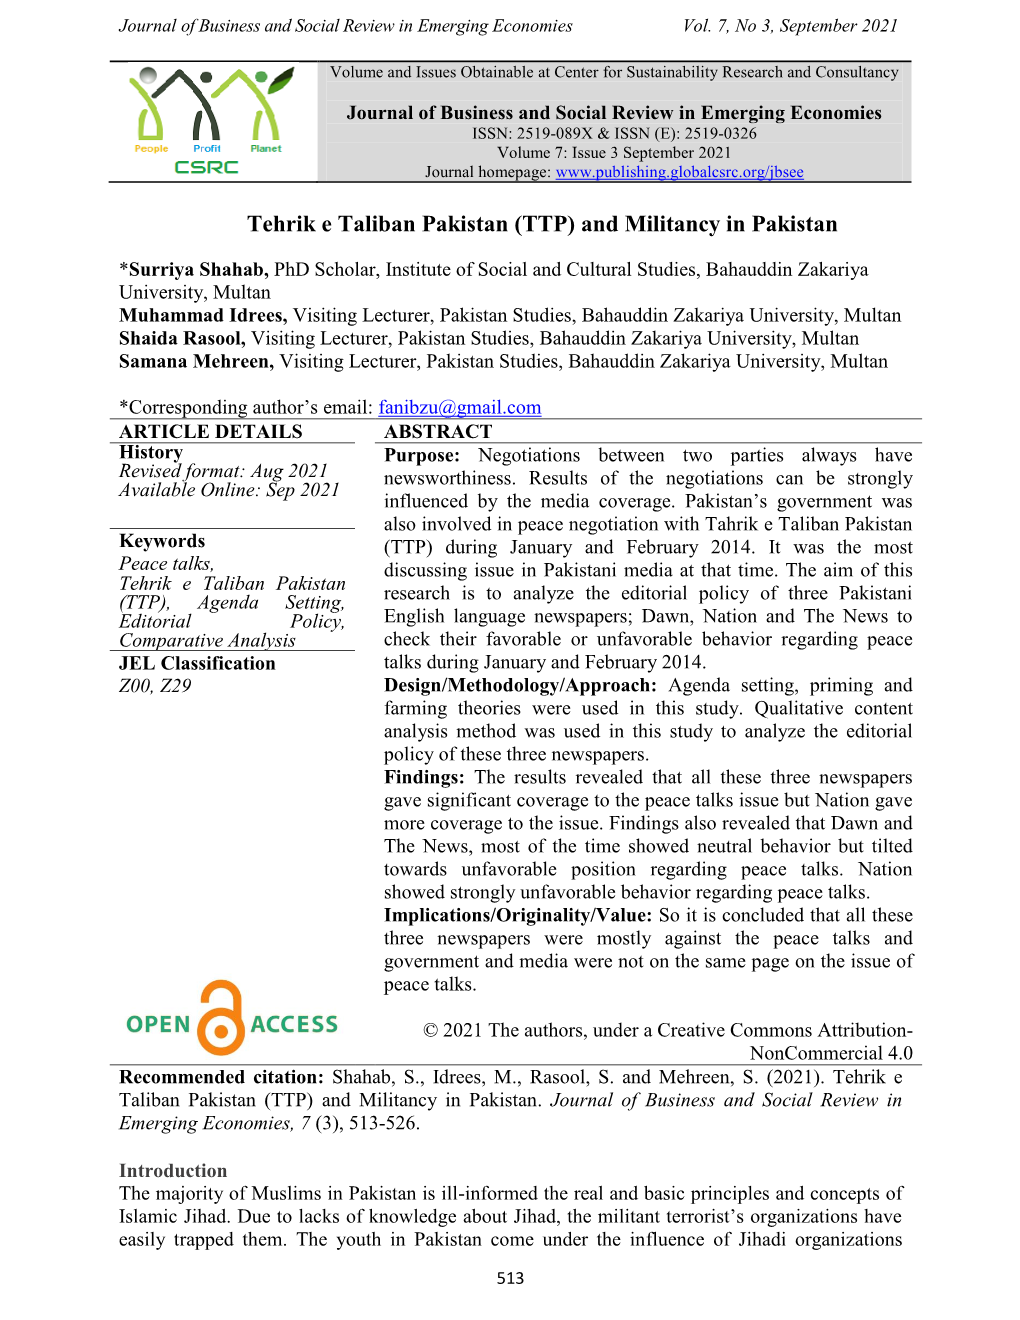 Tehrik E Taliban Pakistan (TTP) and Militancy in Pakistan